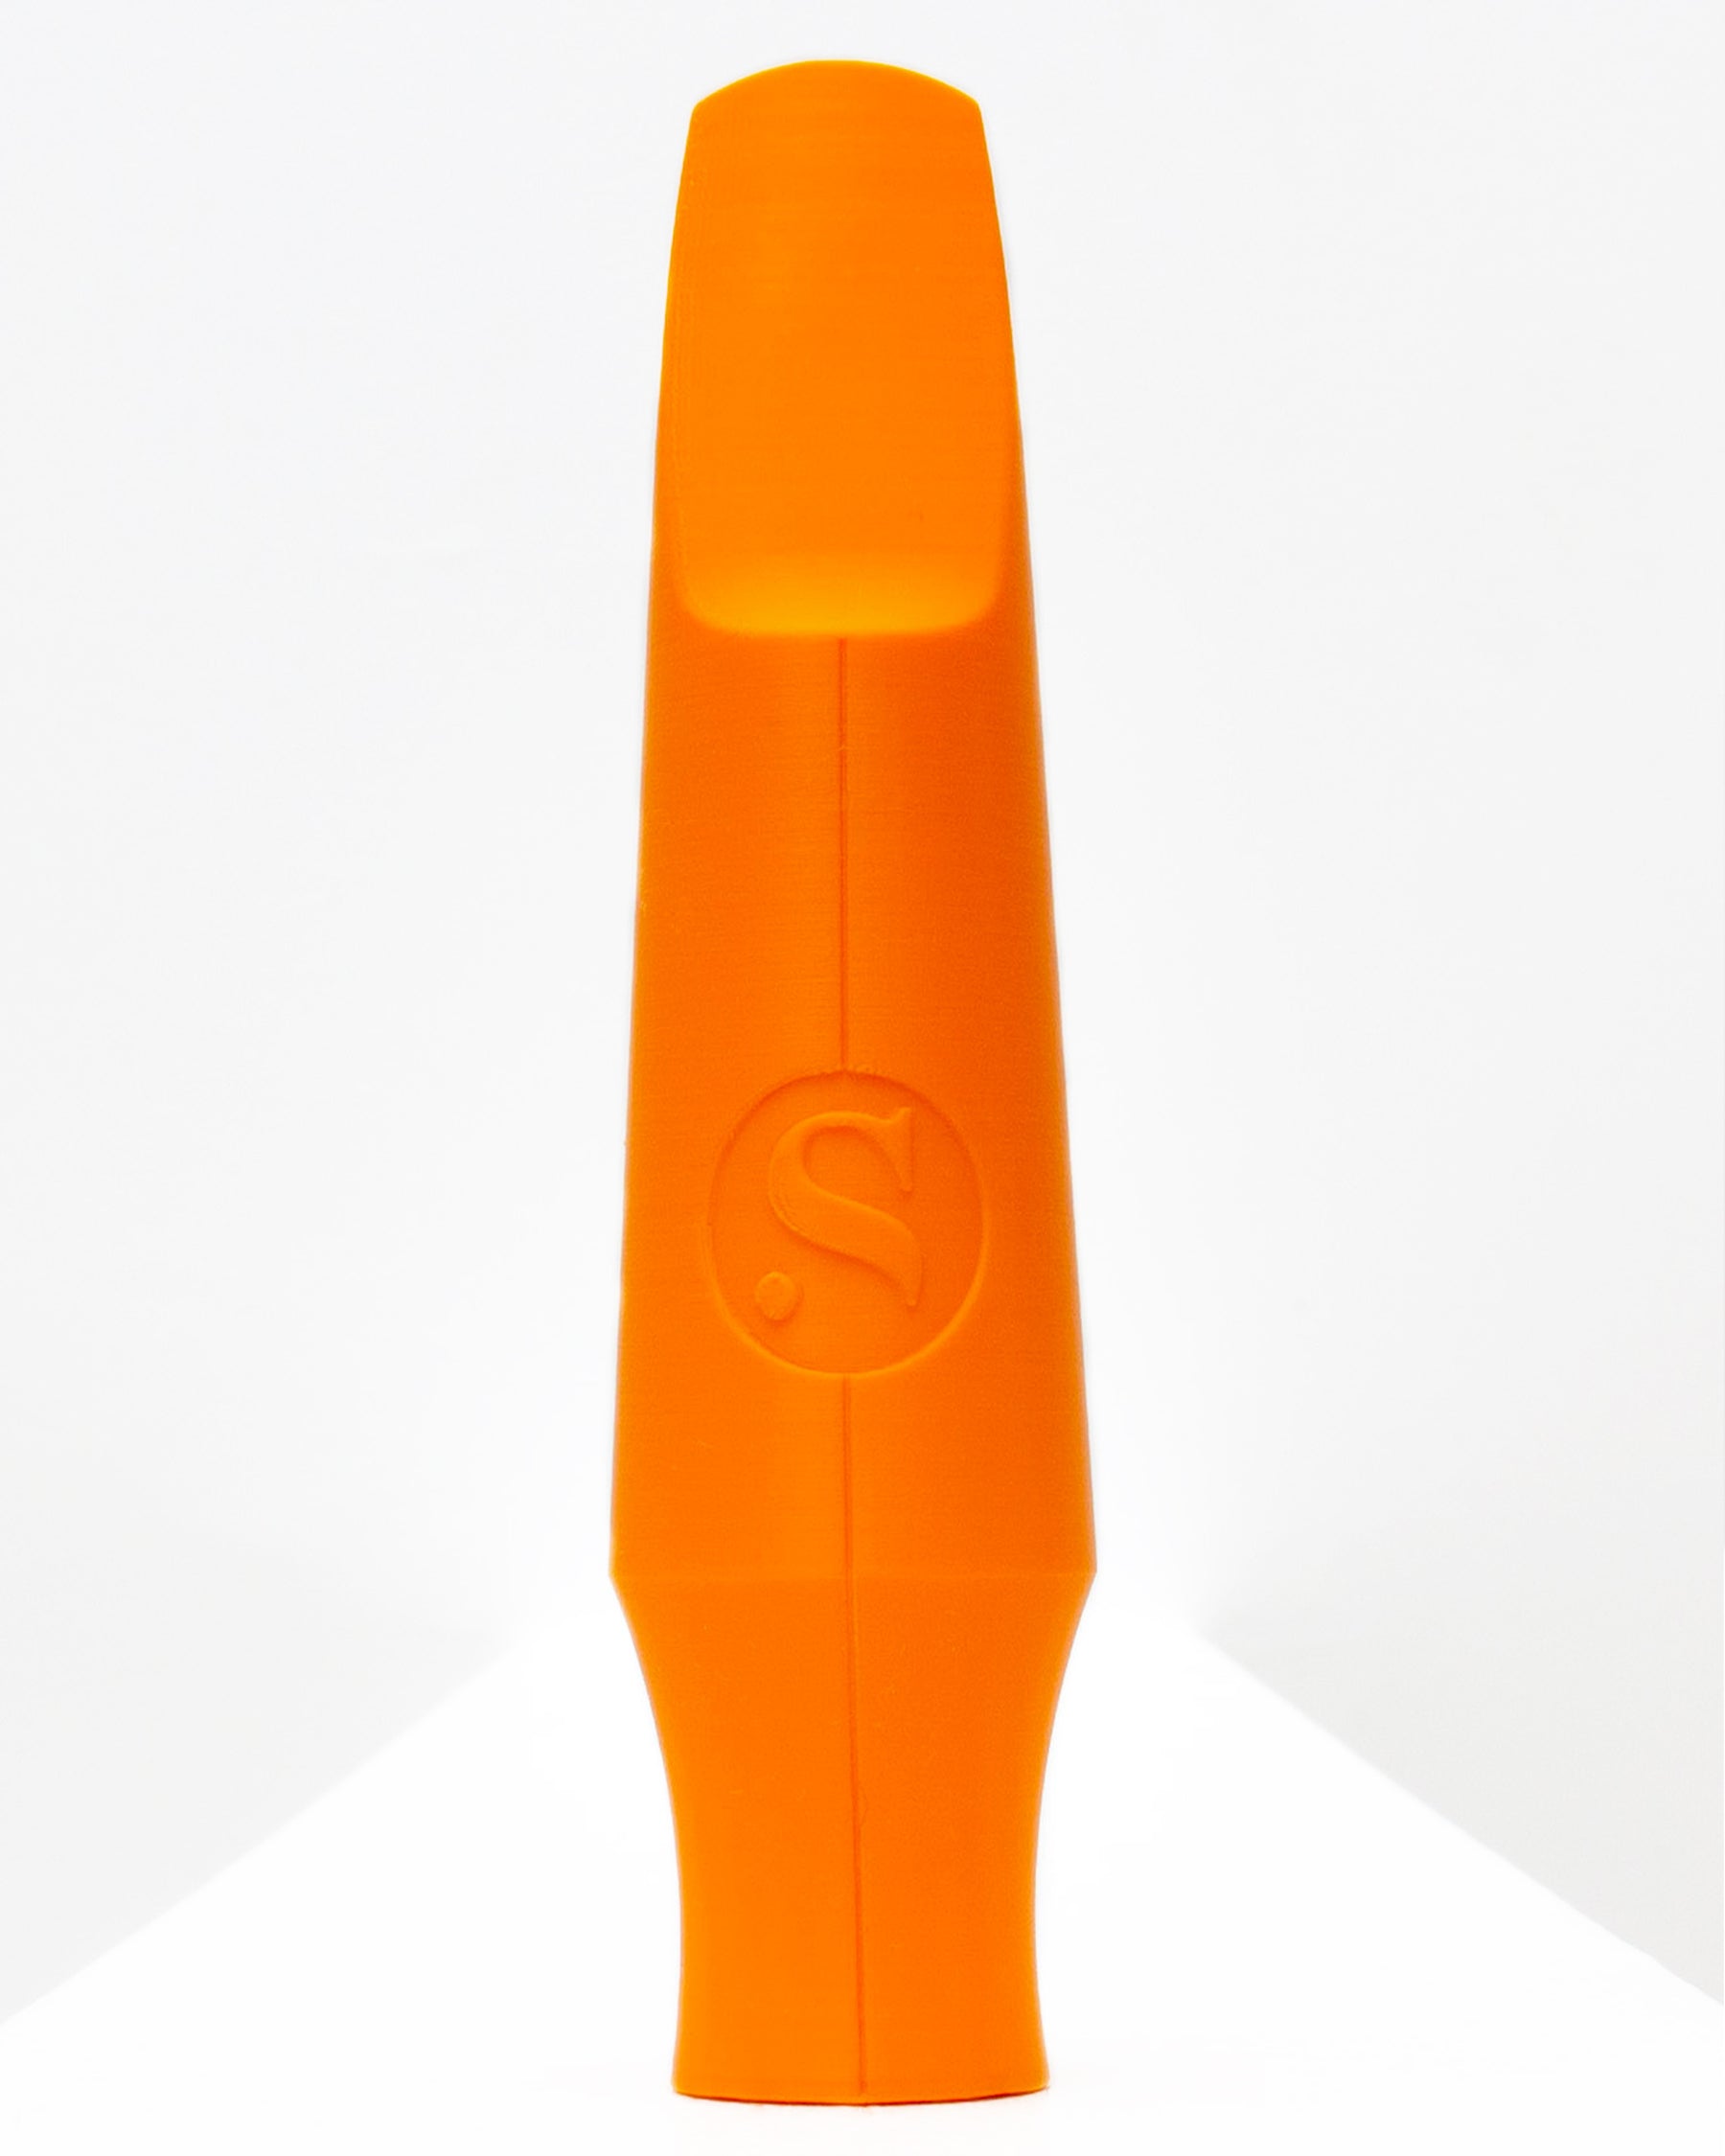 Baritone Signature Saxophone mouthpiece - Daro Behroozi by Syos - 10 / Lava Orange